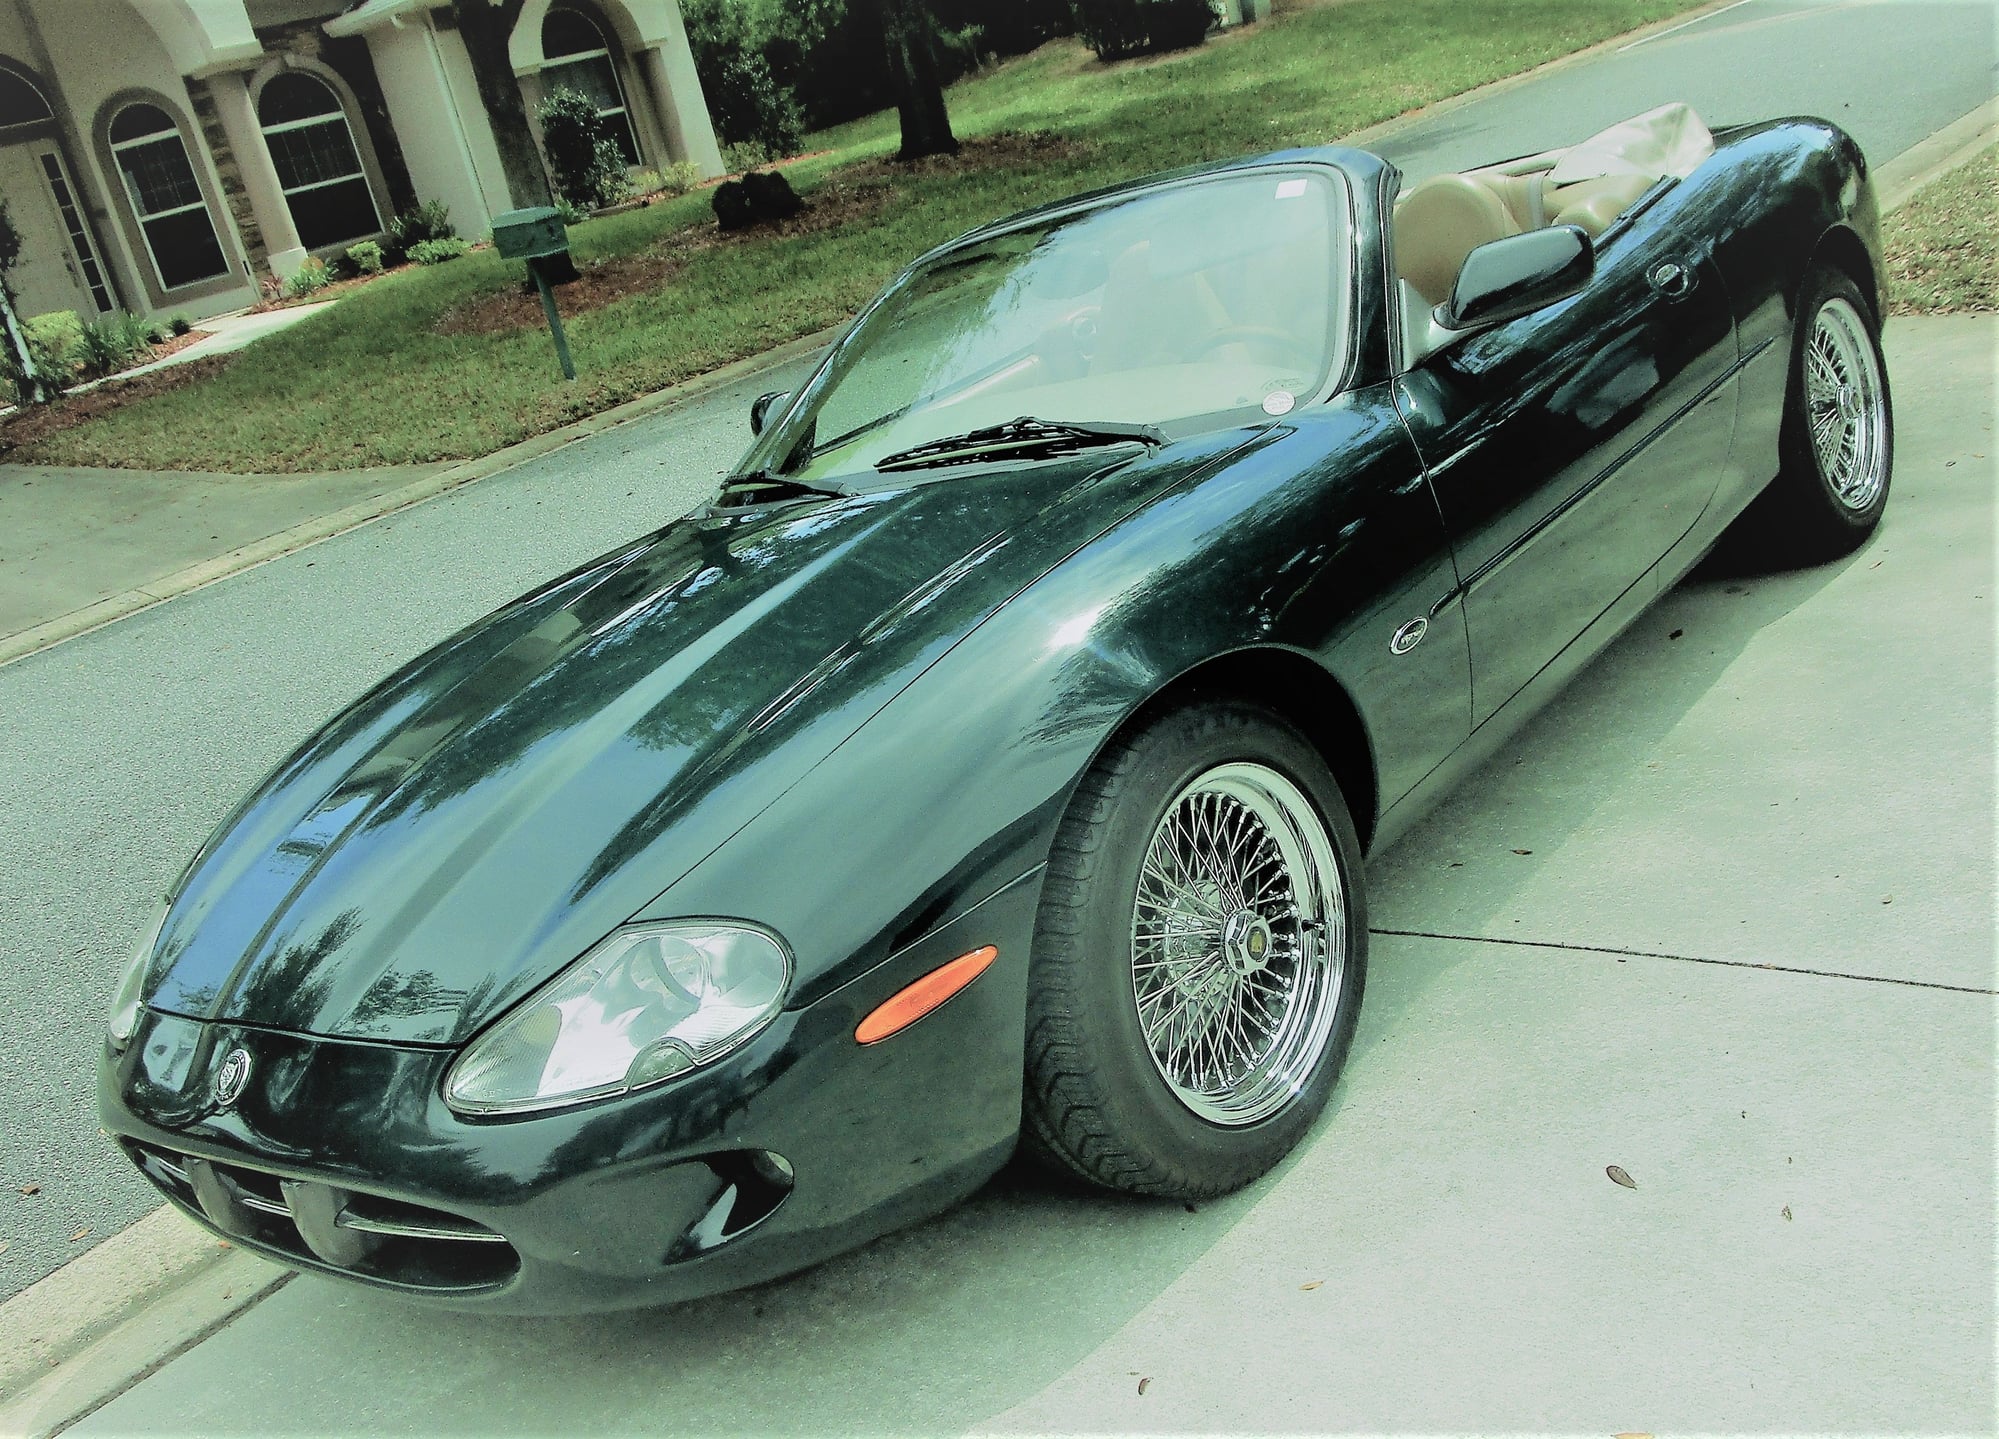 1997 Jaguar XK8 - Xk8 jaguar convertible, brg,  1997 - Used - VIN SAGJGX2742VC00250 - 87,945 Miles - 8 cyl - 2WD - Automatic - Convertible - Other - Ormond Beach, FL 32174, United States